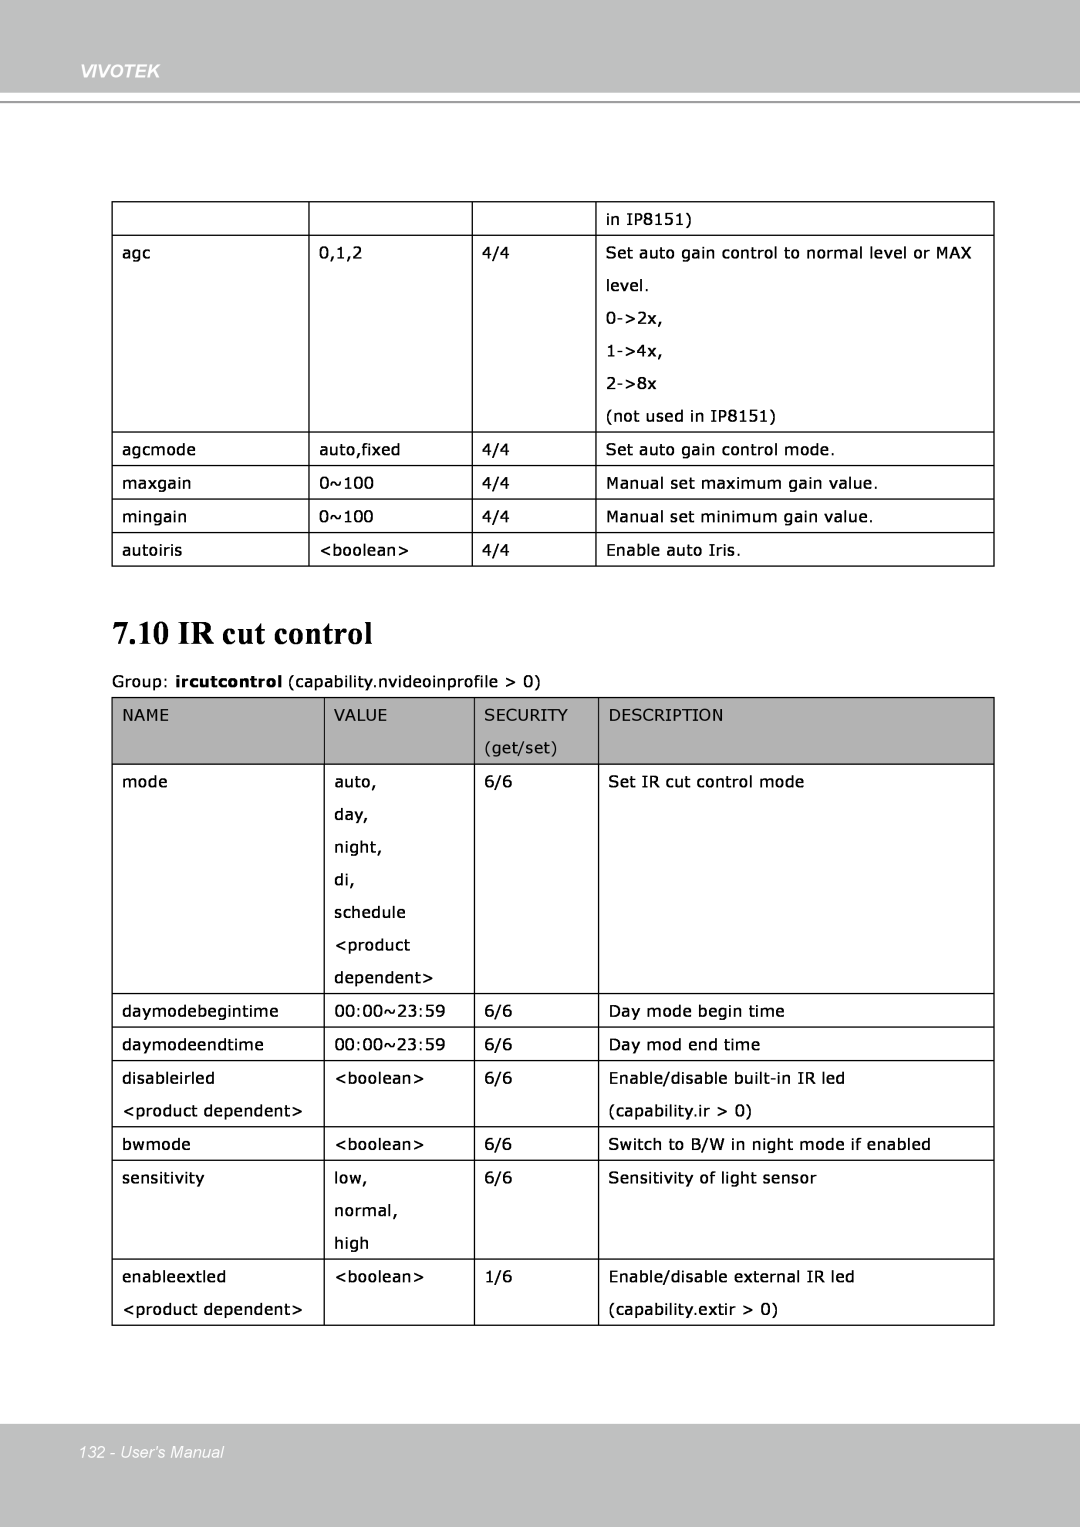 Vivotek IP8151 manual IR cut control, Vivotek, Users Manual 